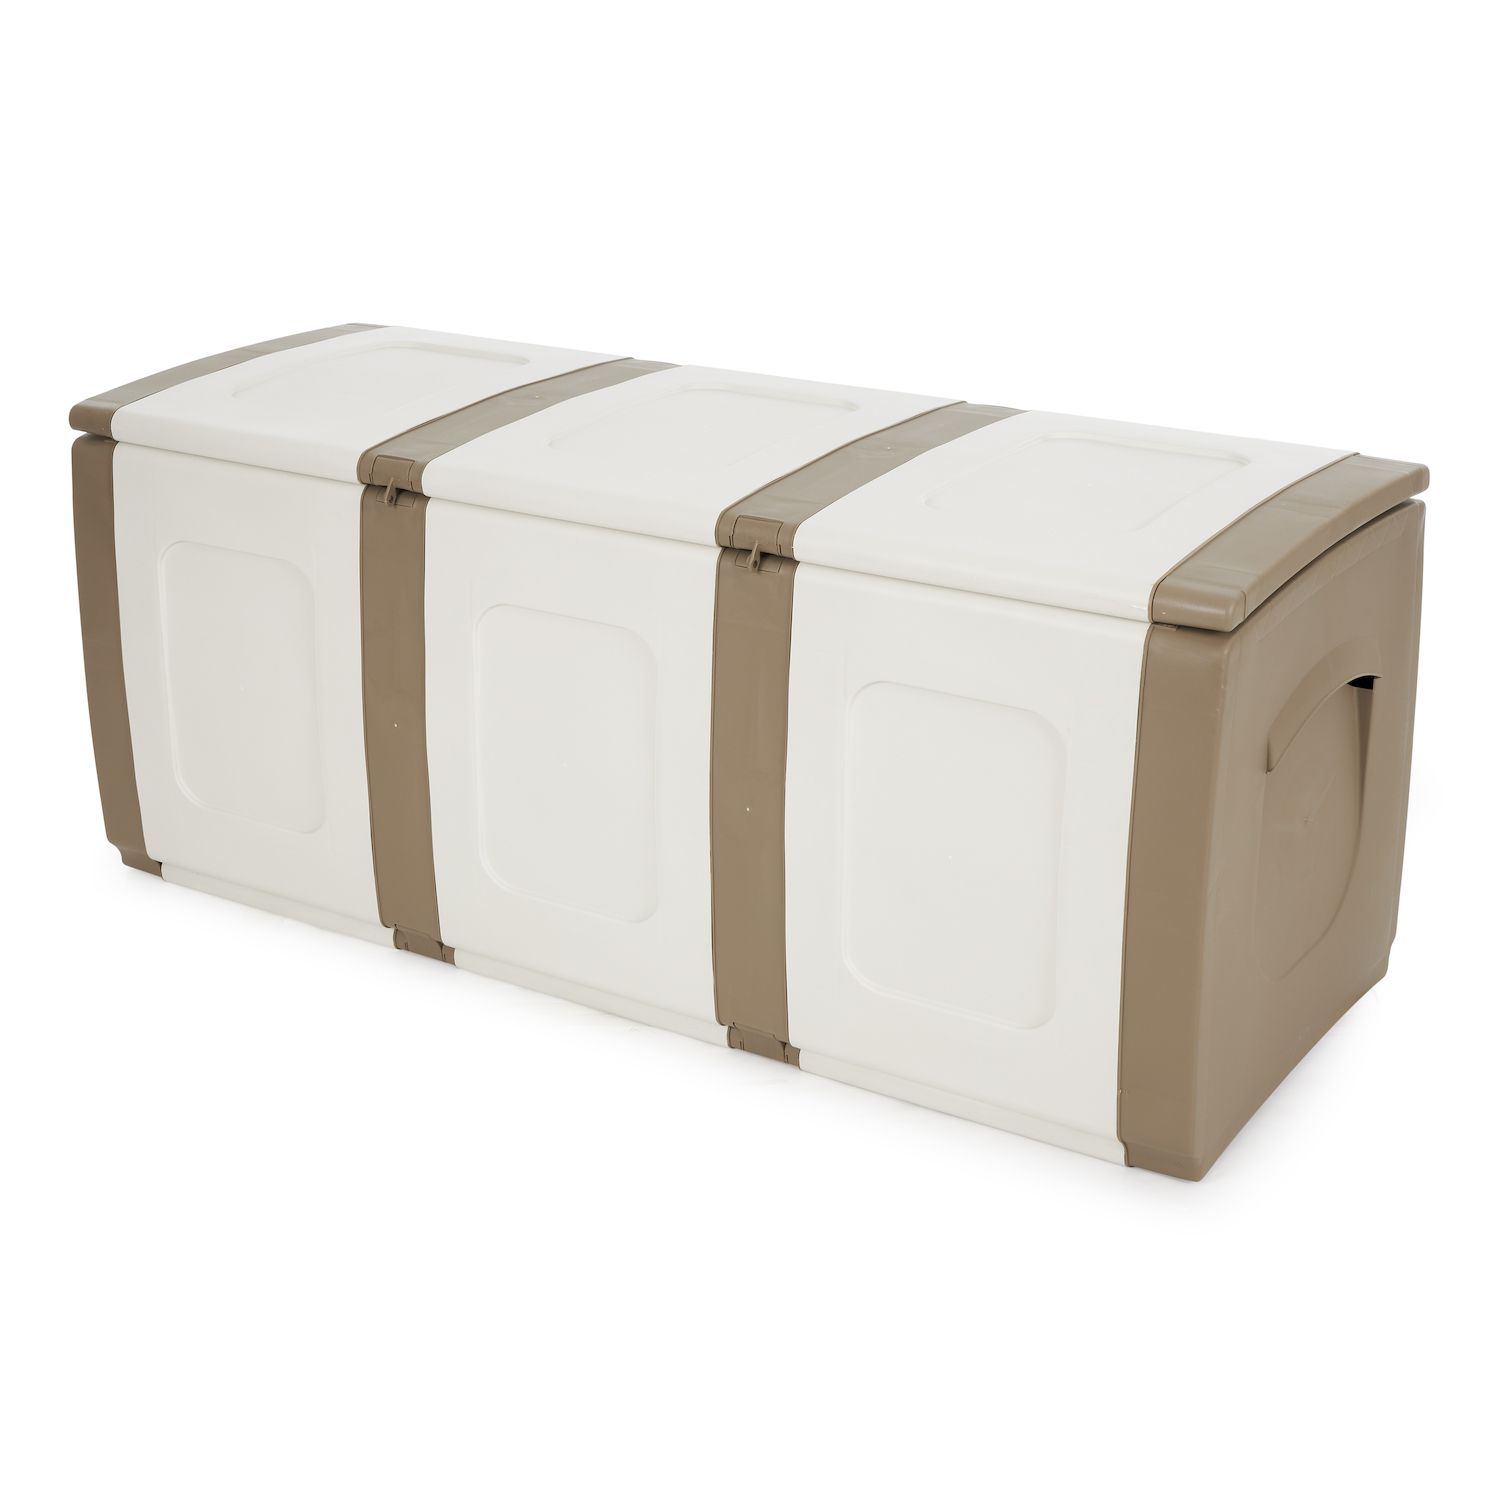 Ram Quality Products Plastic 90 Gal Outdoor Locking Storage Bin Deck Box, Brown